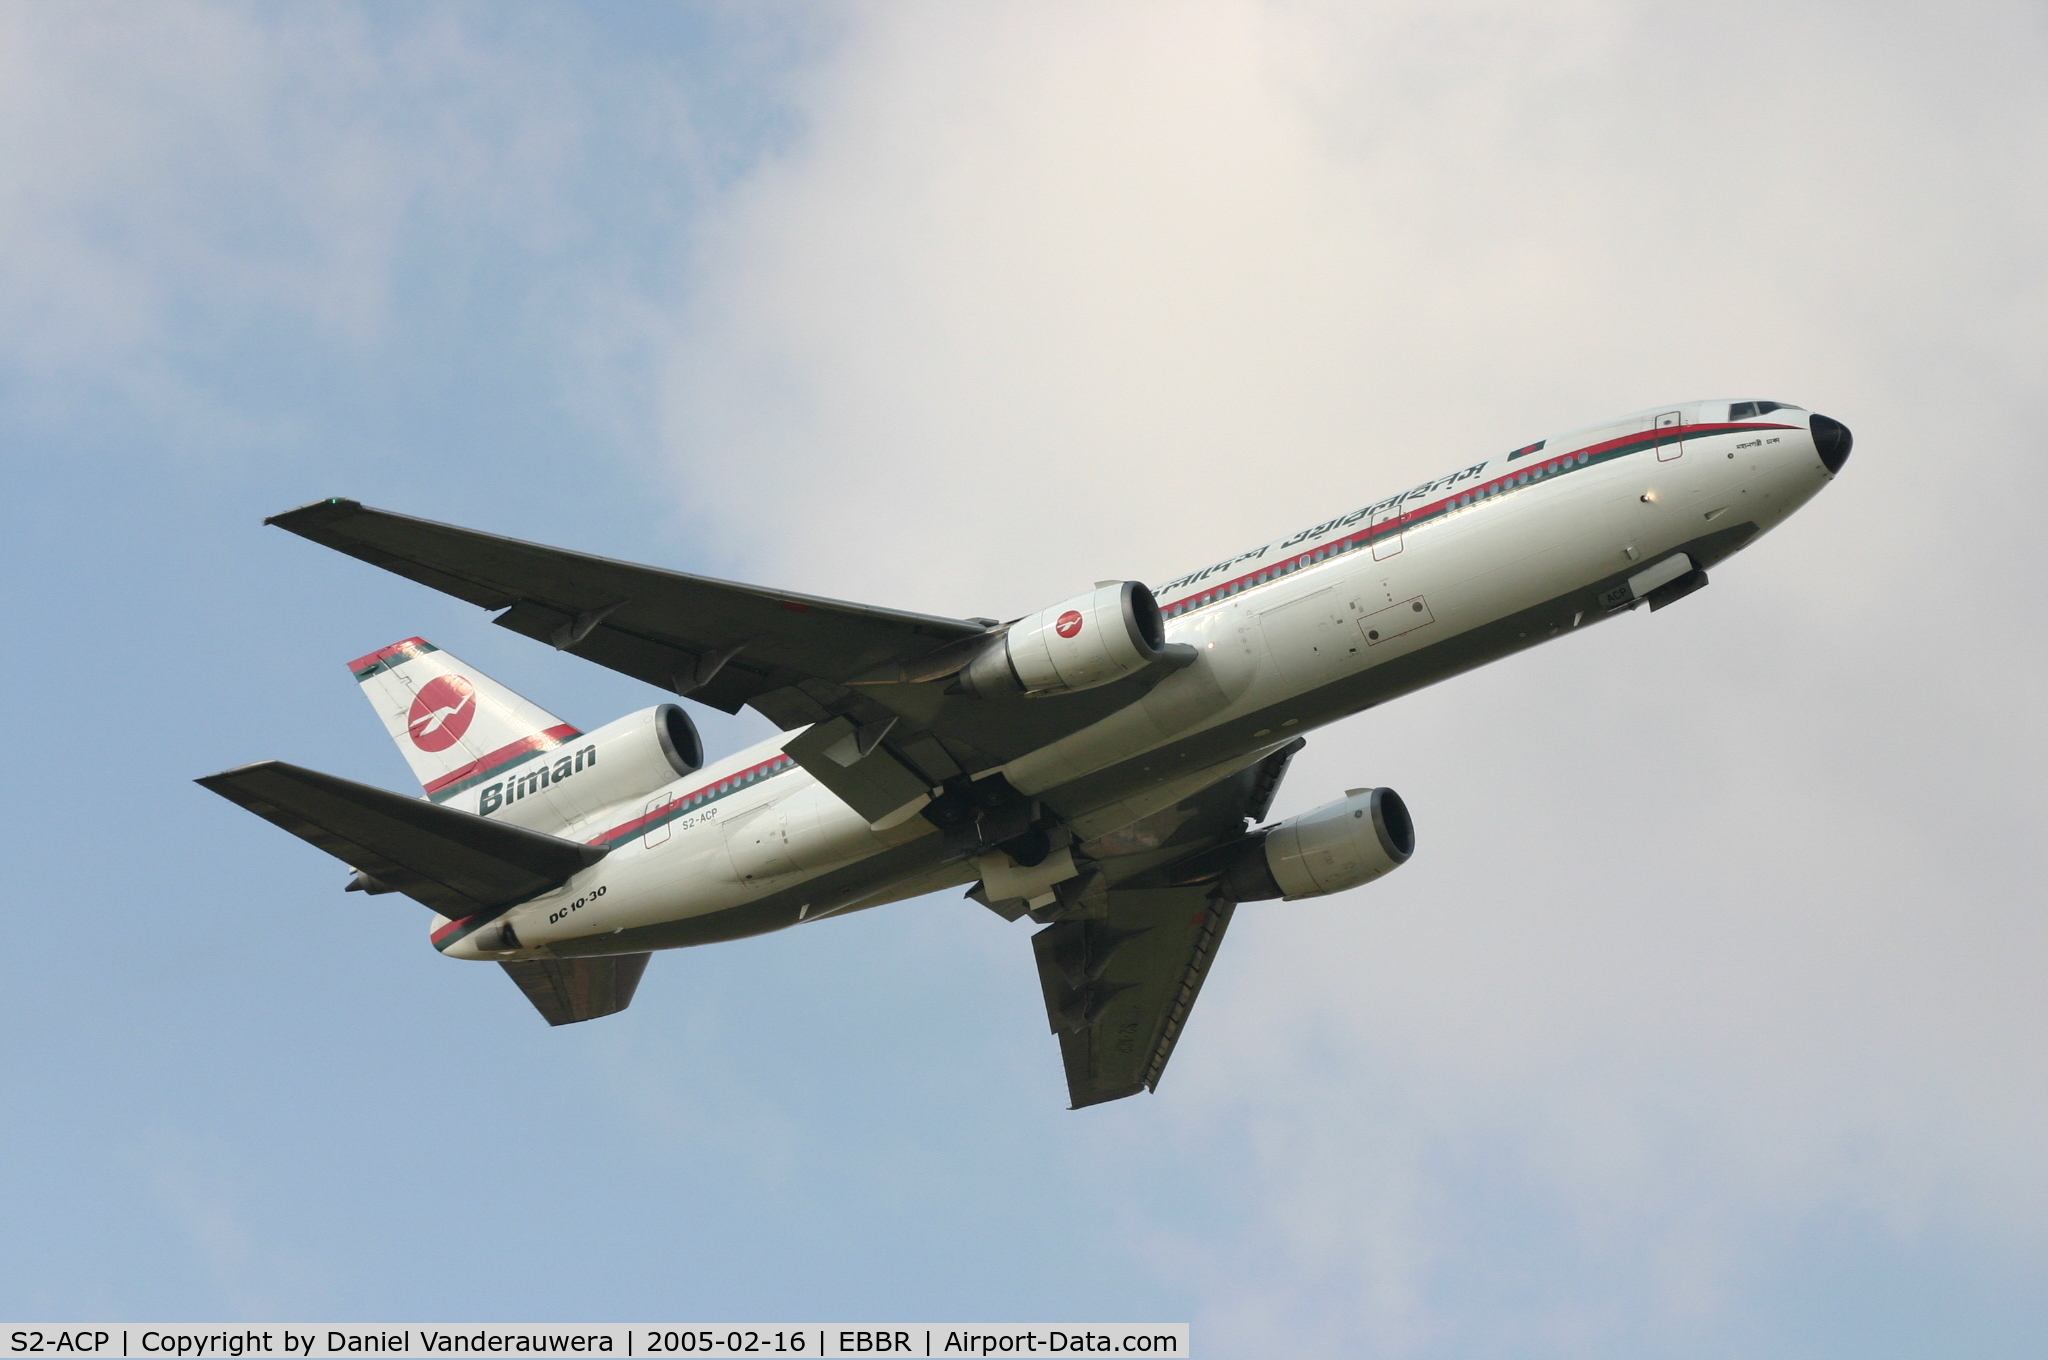 S2-ACP, 1979 McDonnell Douglas DC-10-30 C/N 46995/275, flight BG012 is taking off from rwy 07R